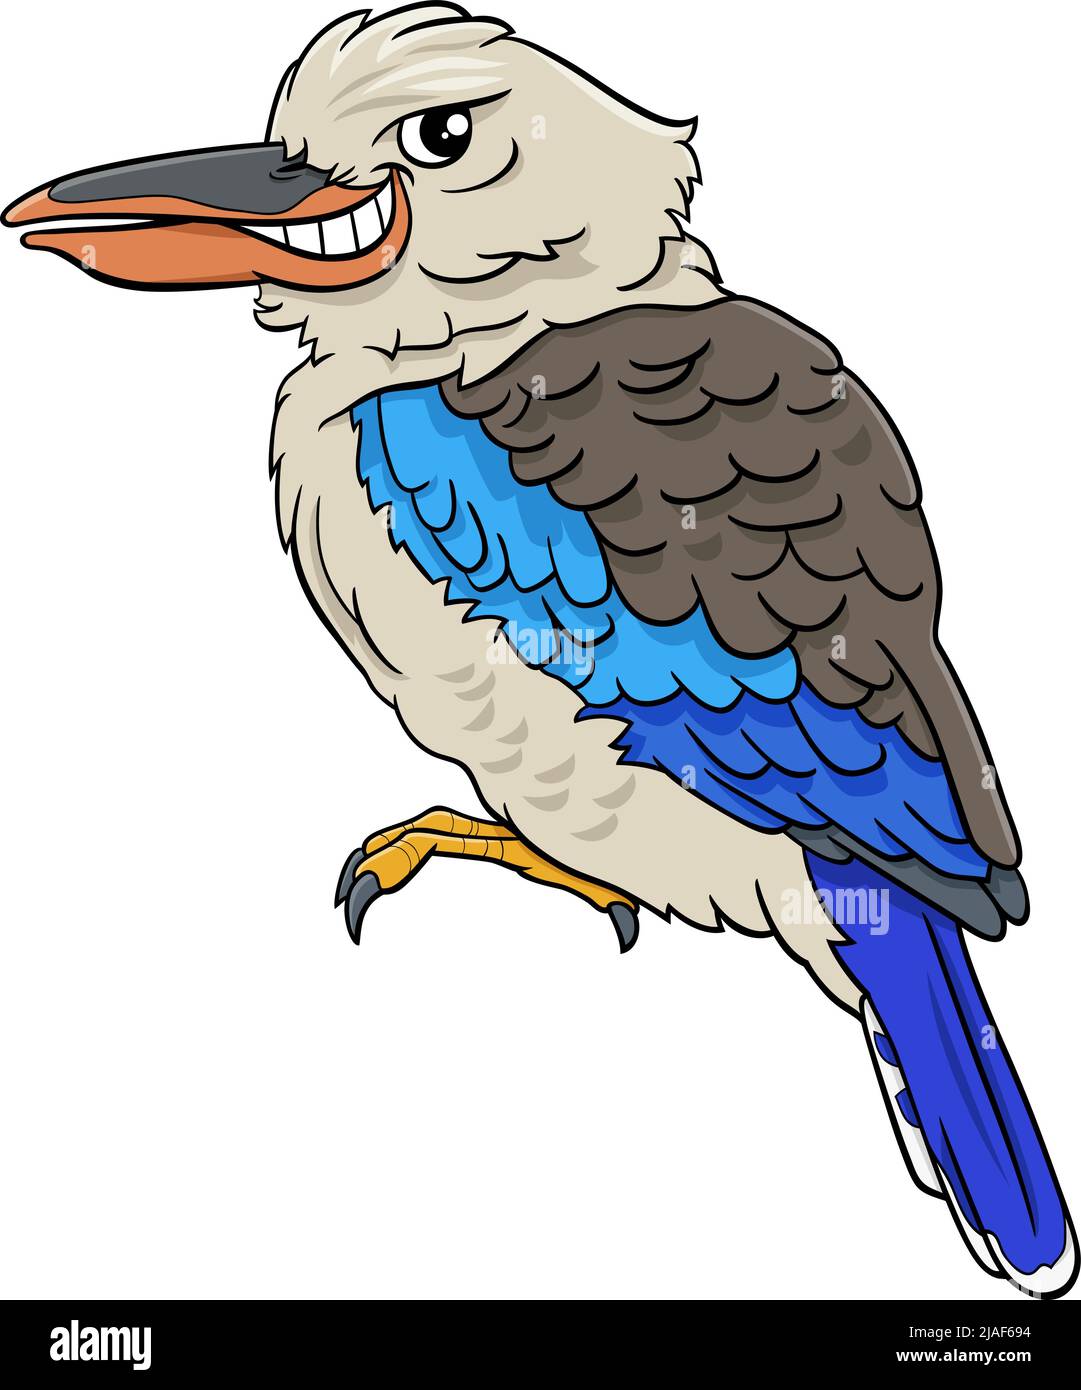 Cartoon illustration of funny kookaburra bird animal character Stock Vector